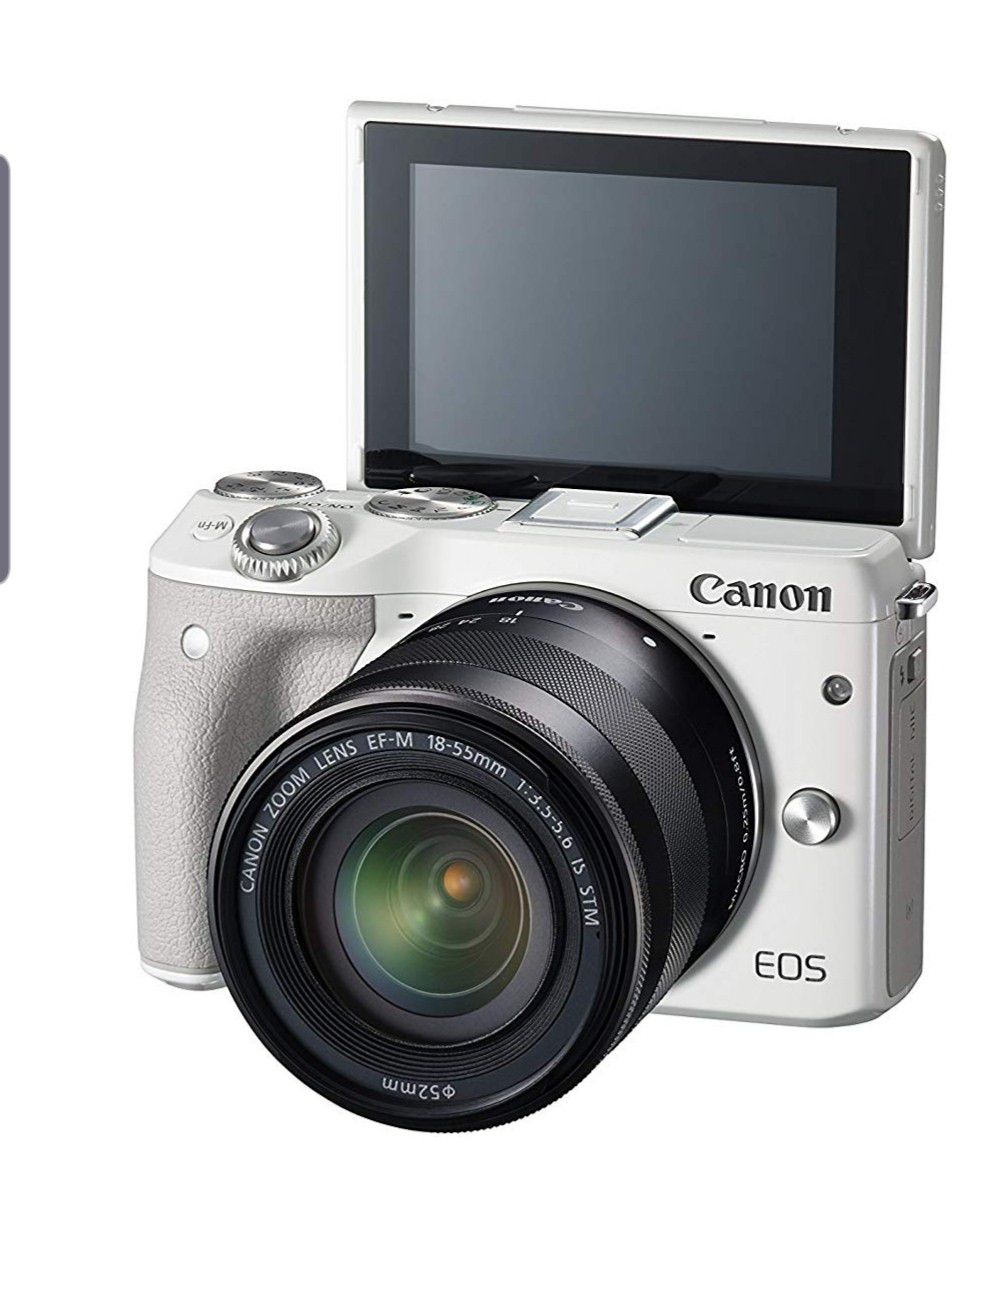 Canon EOS M3 for sale!